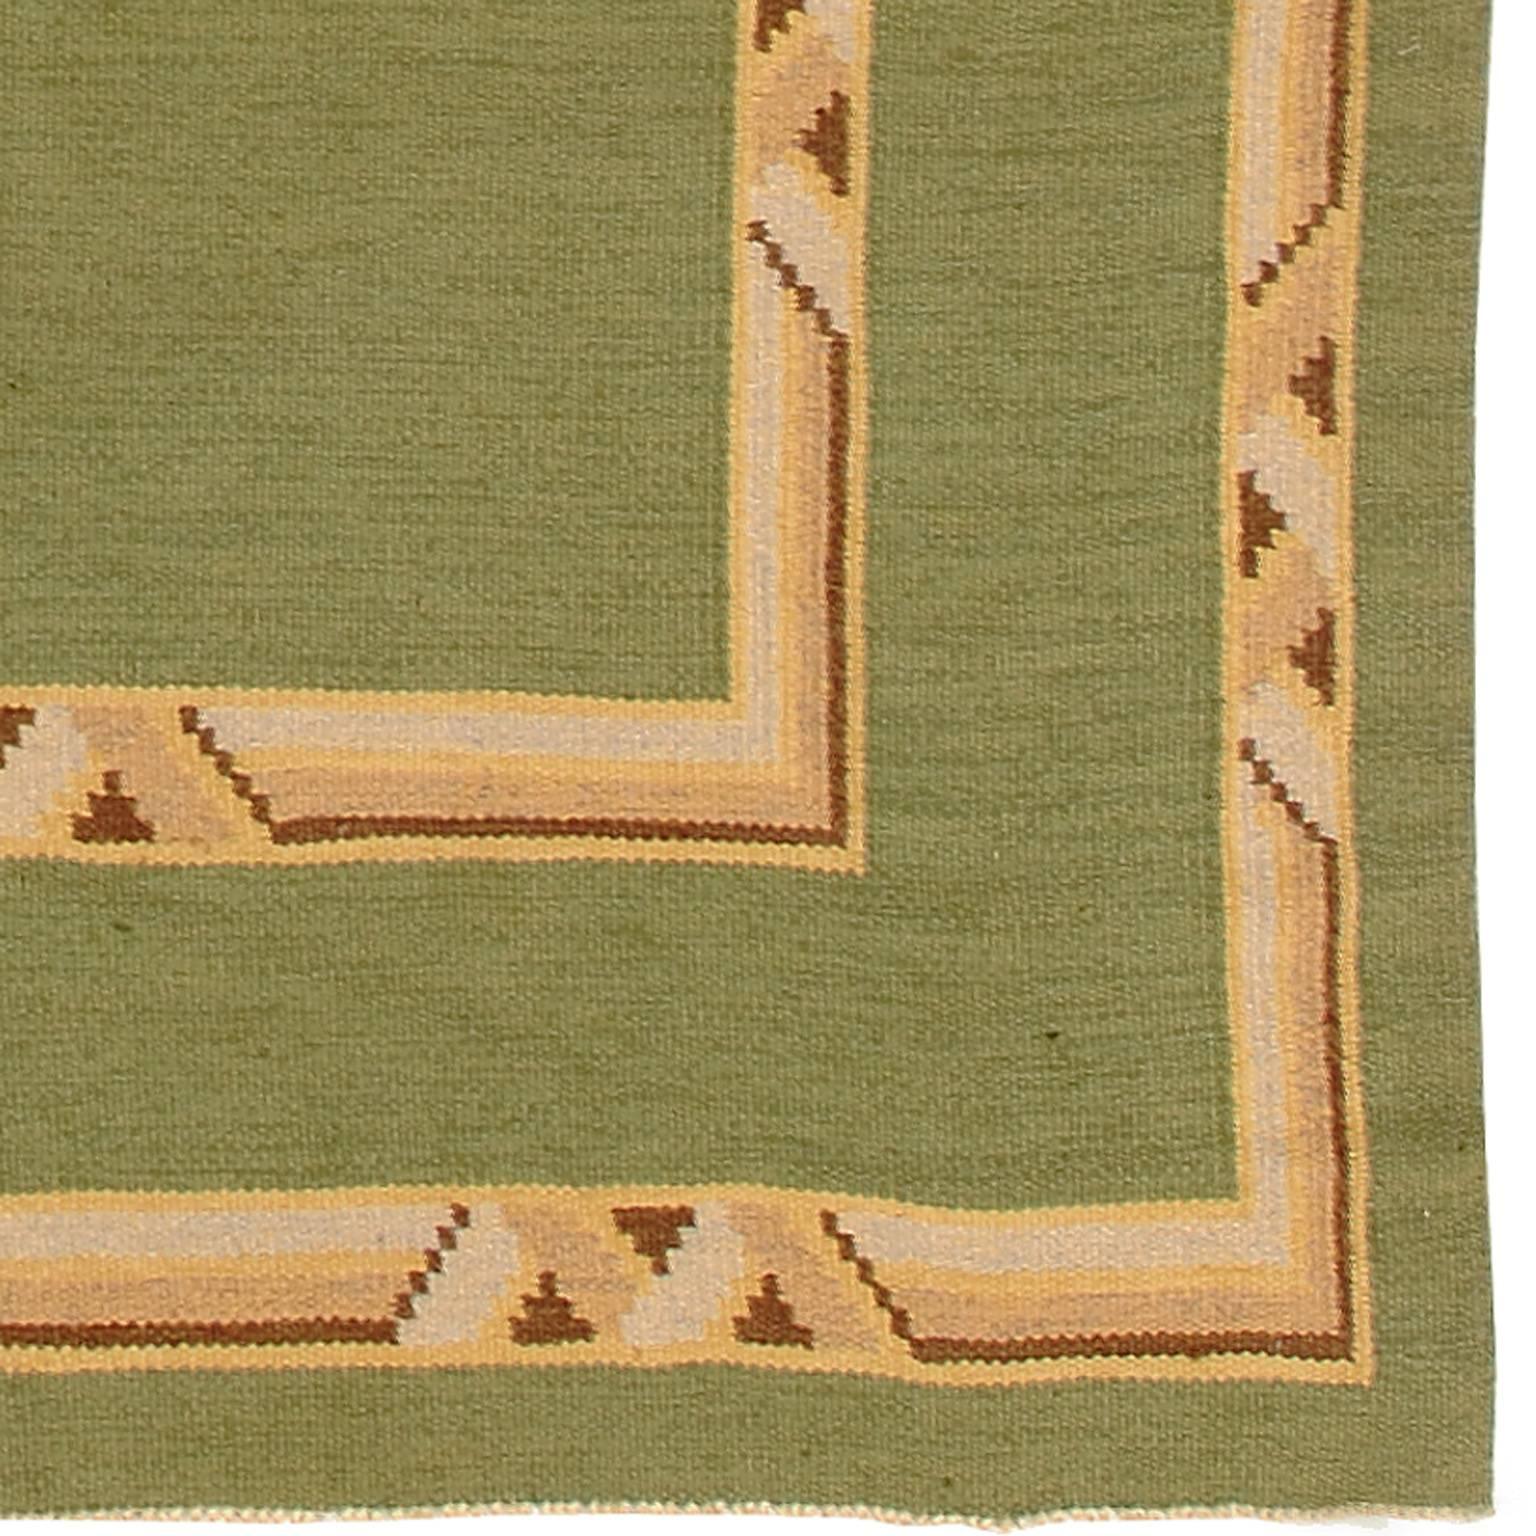 Early 20th century Swedish flat-weave carpet.